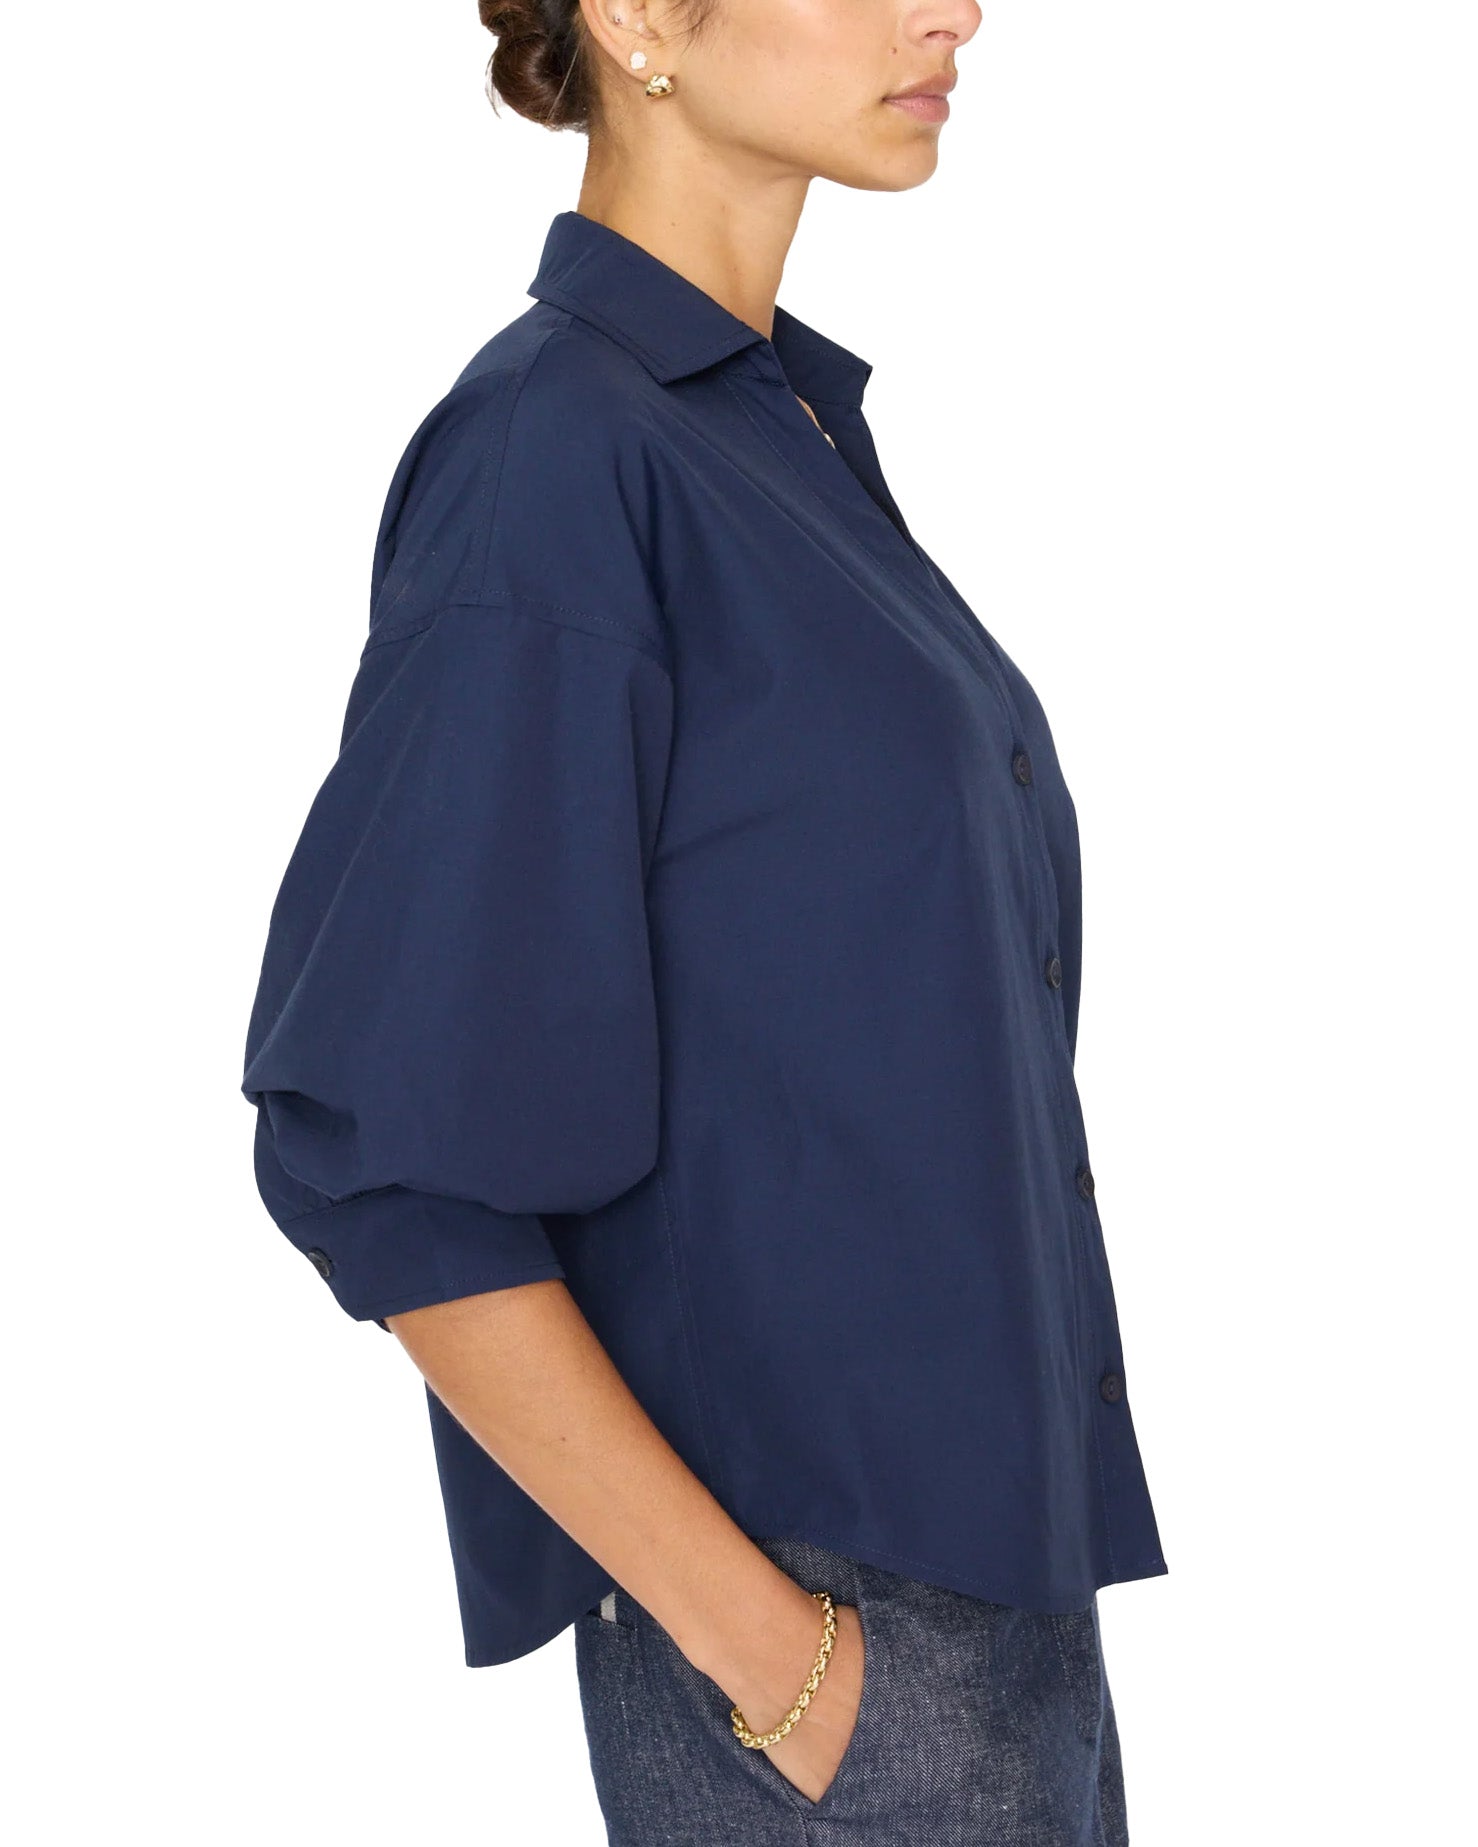 Kate Shirt (Navy)